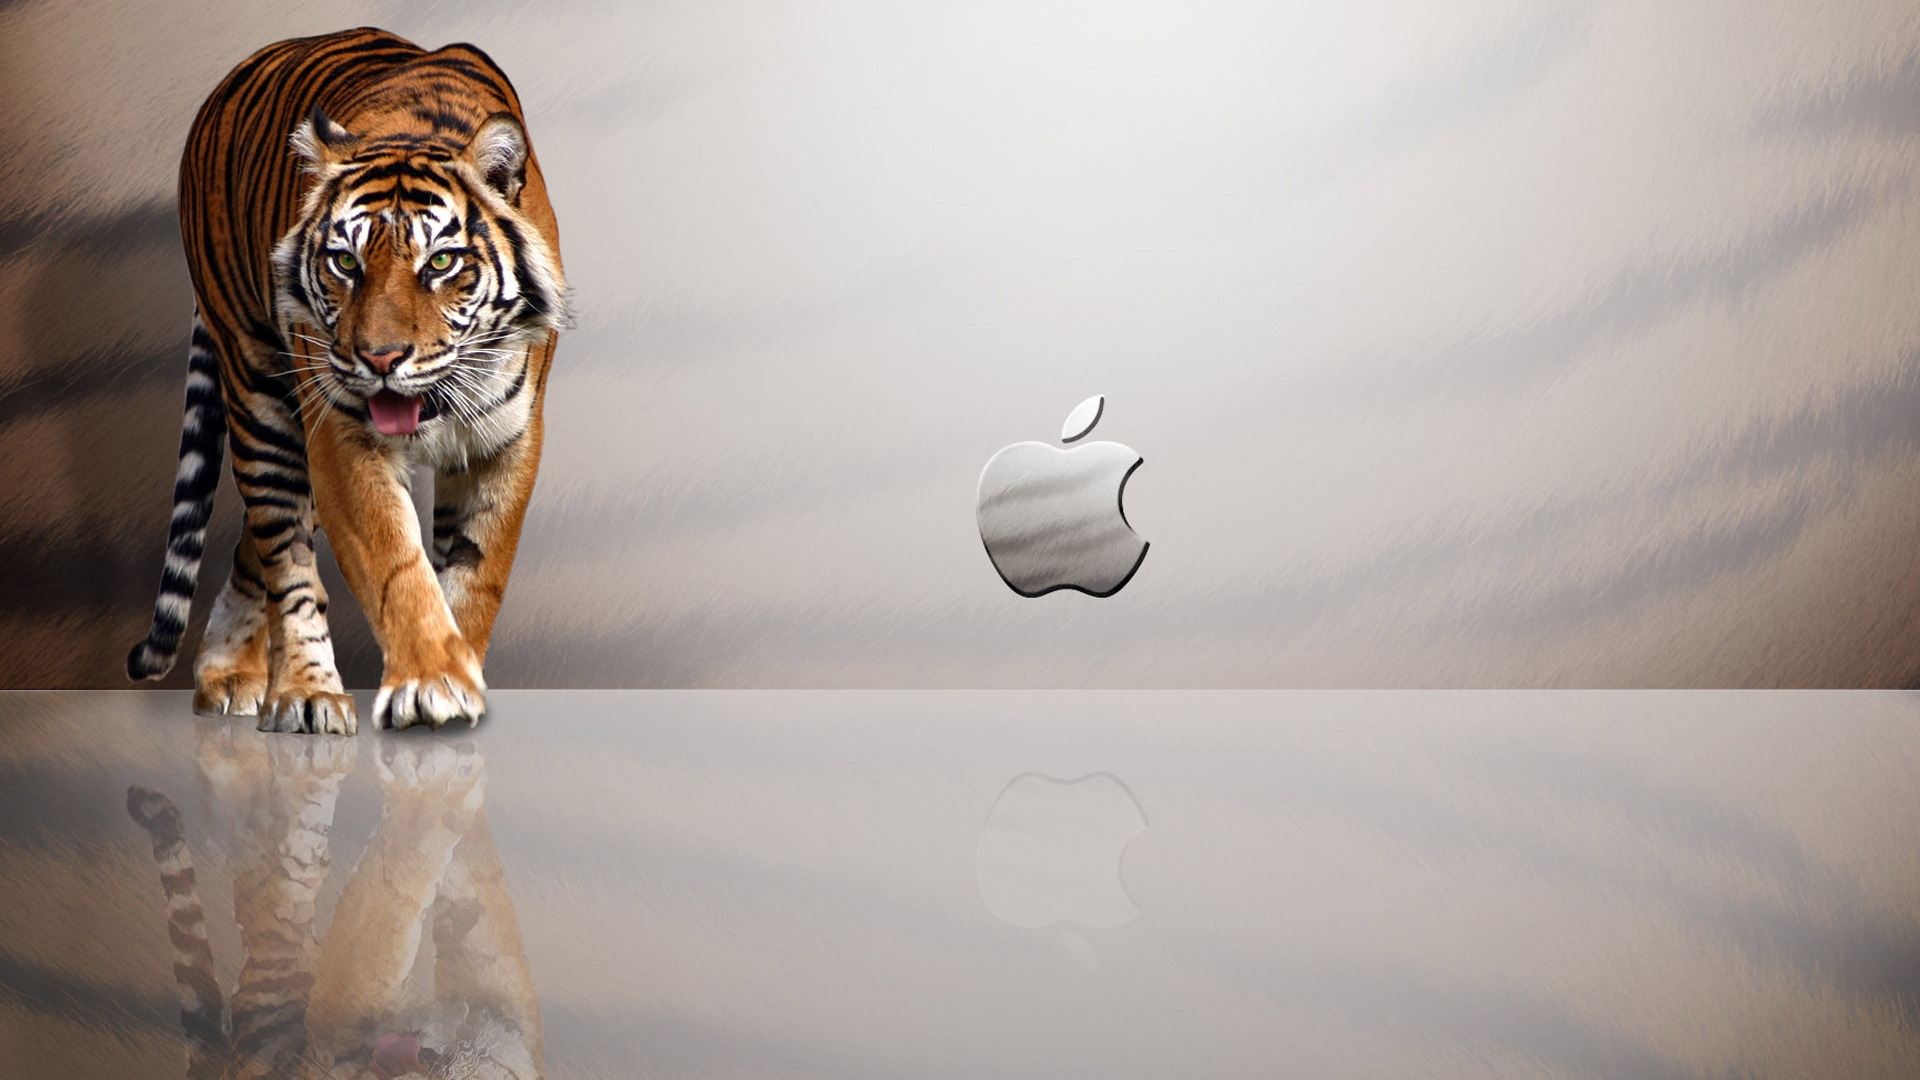 Tiger Apple for 1920 x 1080 HDTV 1080p resolution